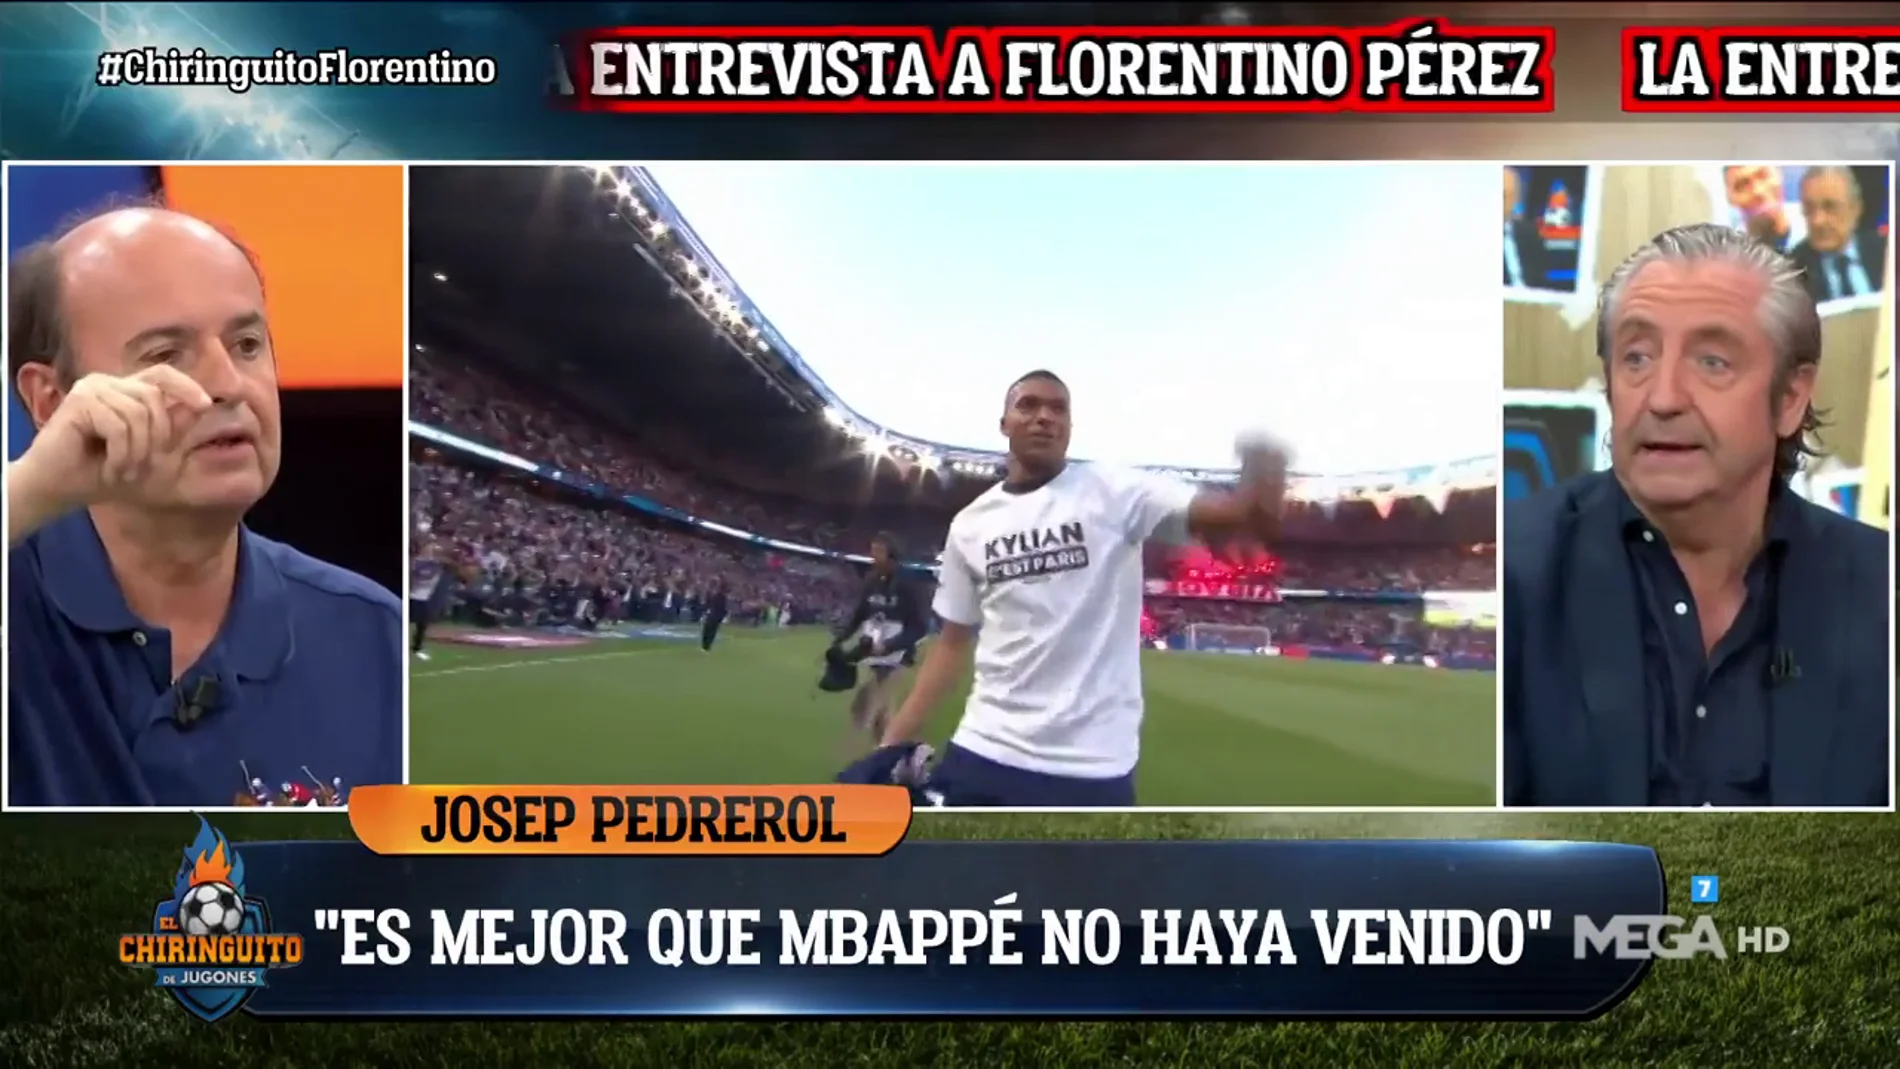 Josep Pedrerol: "Es mejor que Mbappé no haya venido al Real Madrid" 